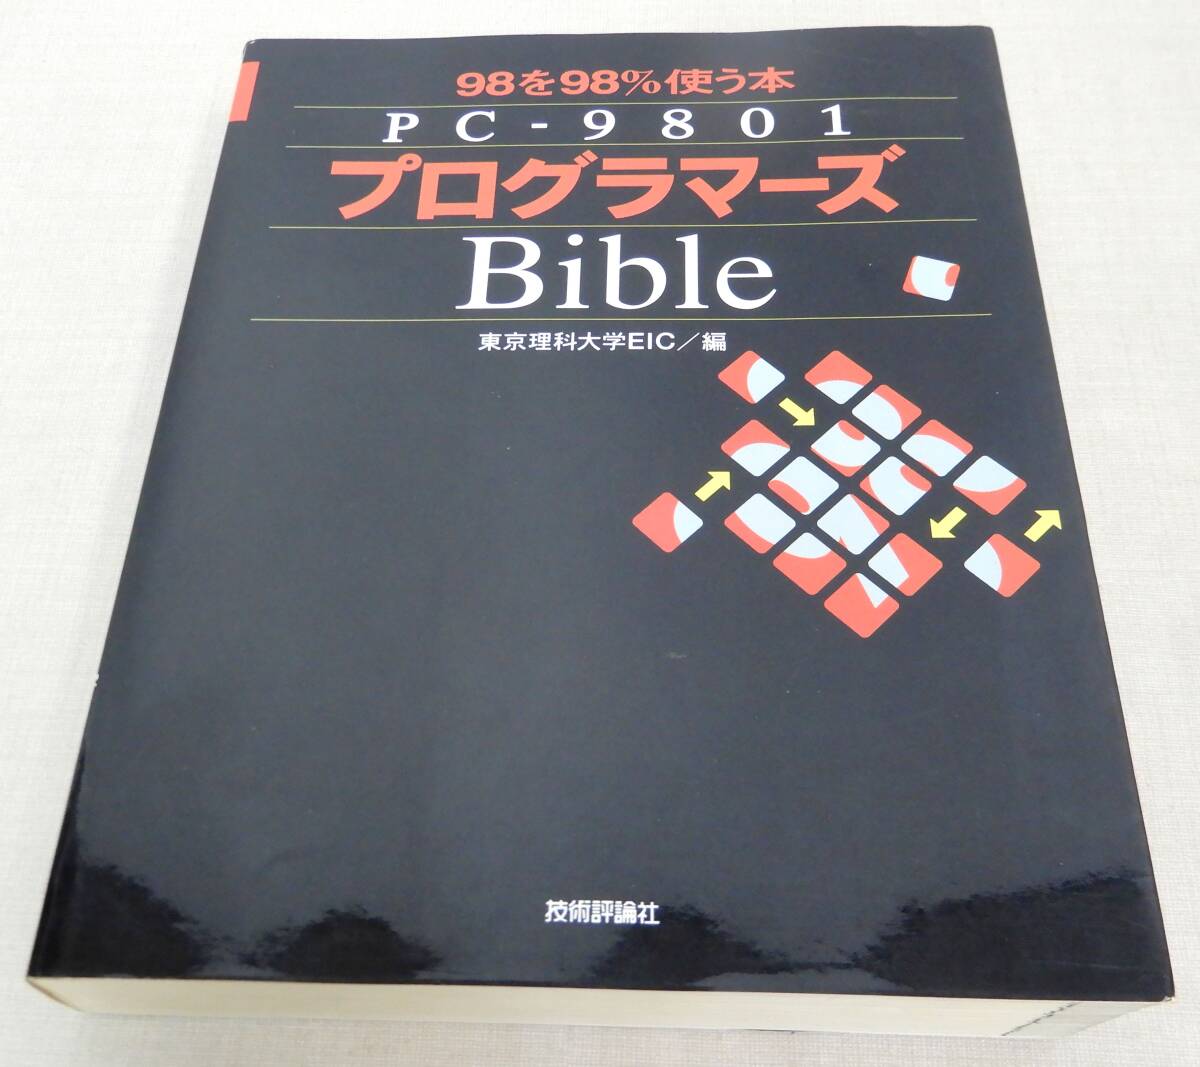 KS202/ PC-9801 プログラマーズ Bible 98を98%使う本 /東京理科大学EIC/編 技術評論社の画像1